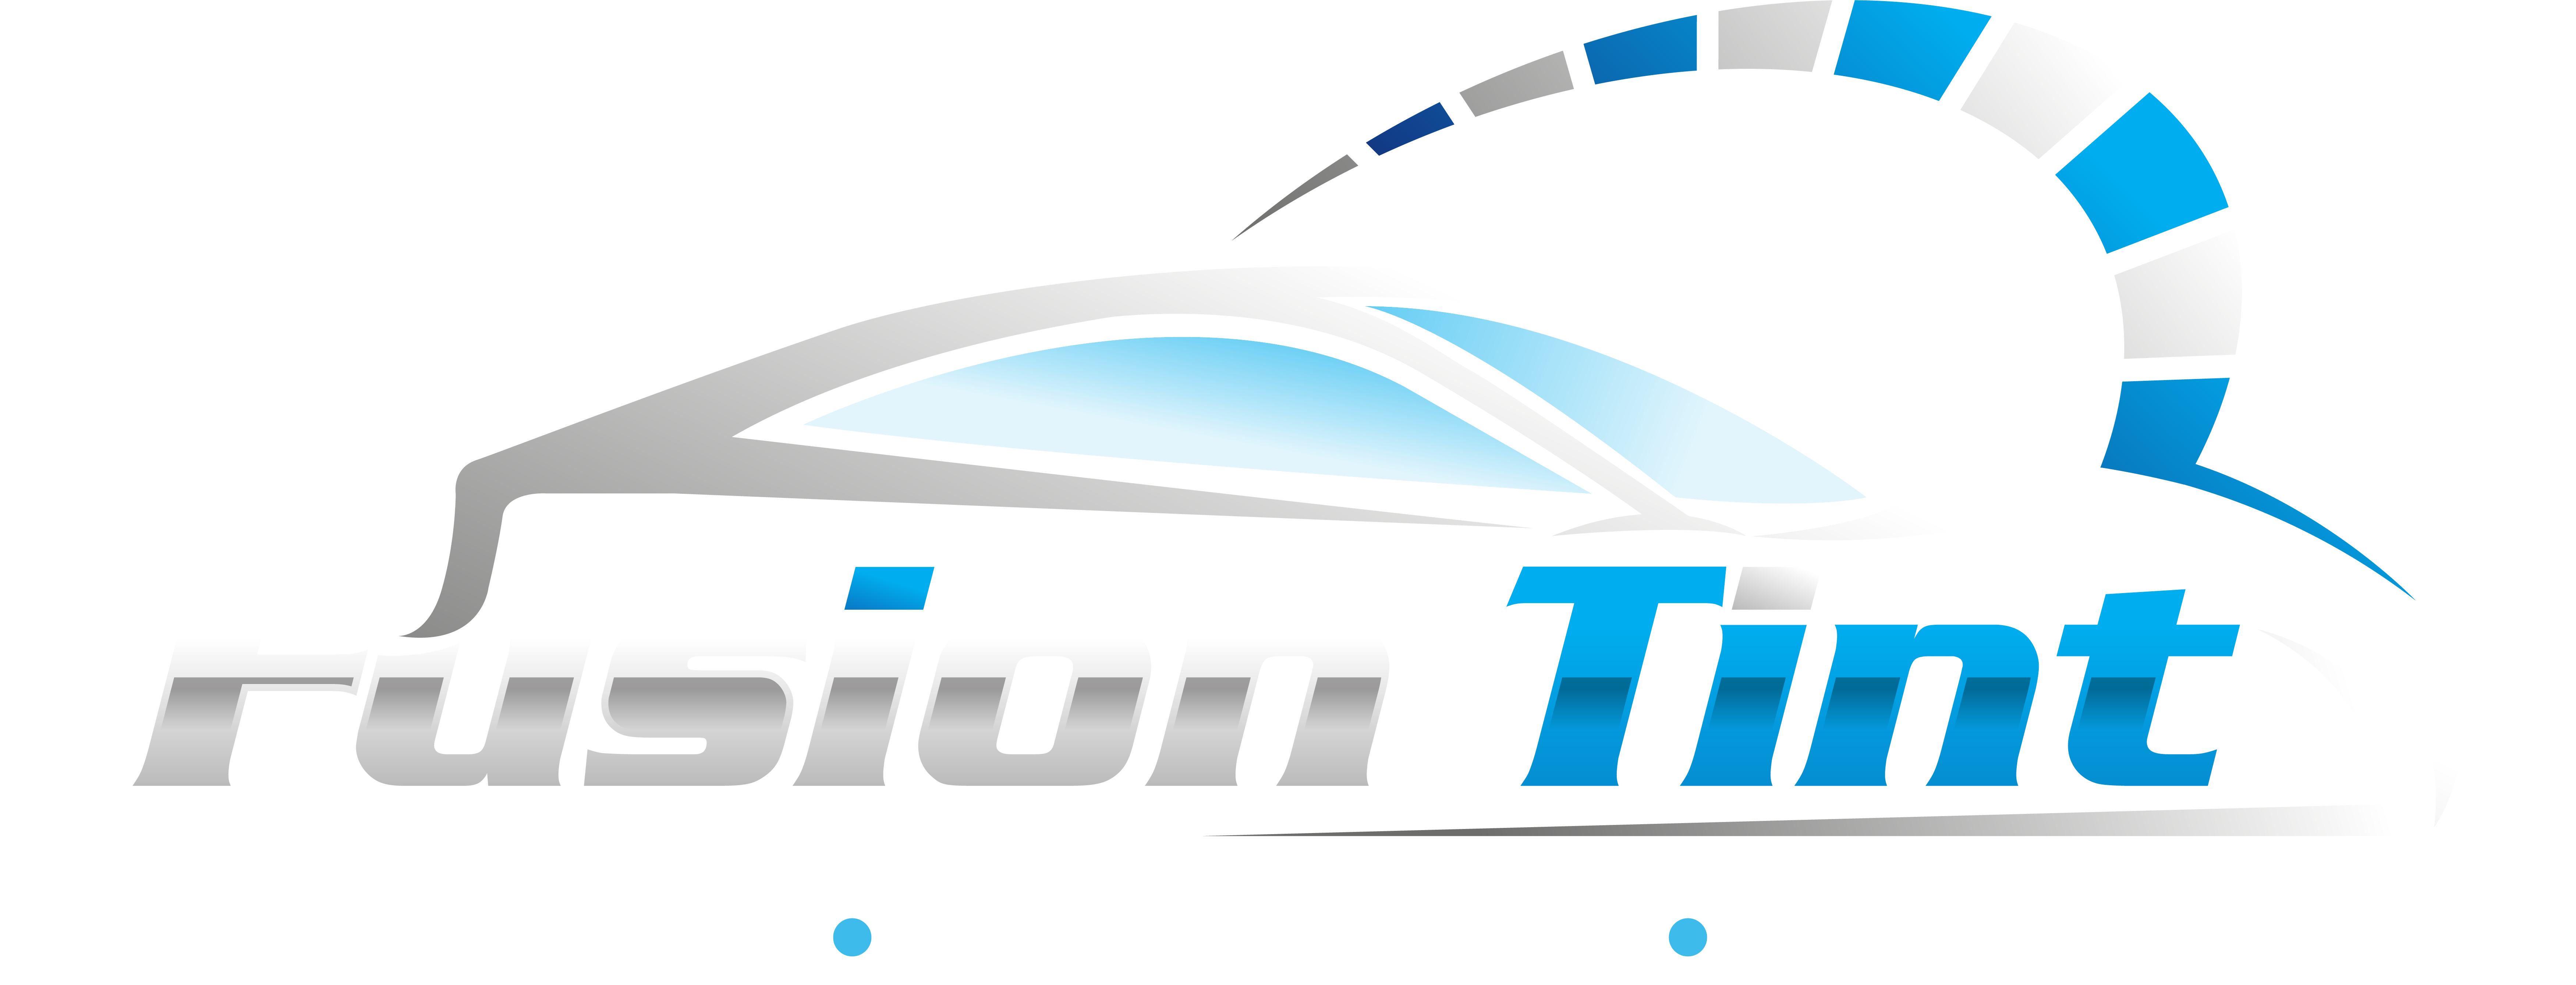 Fusion tint logo